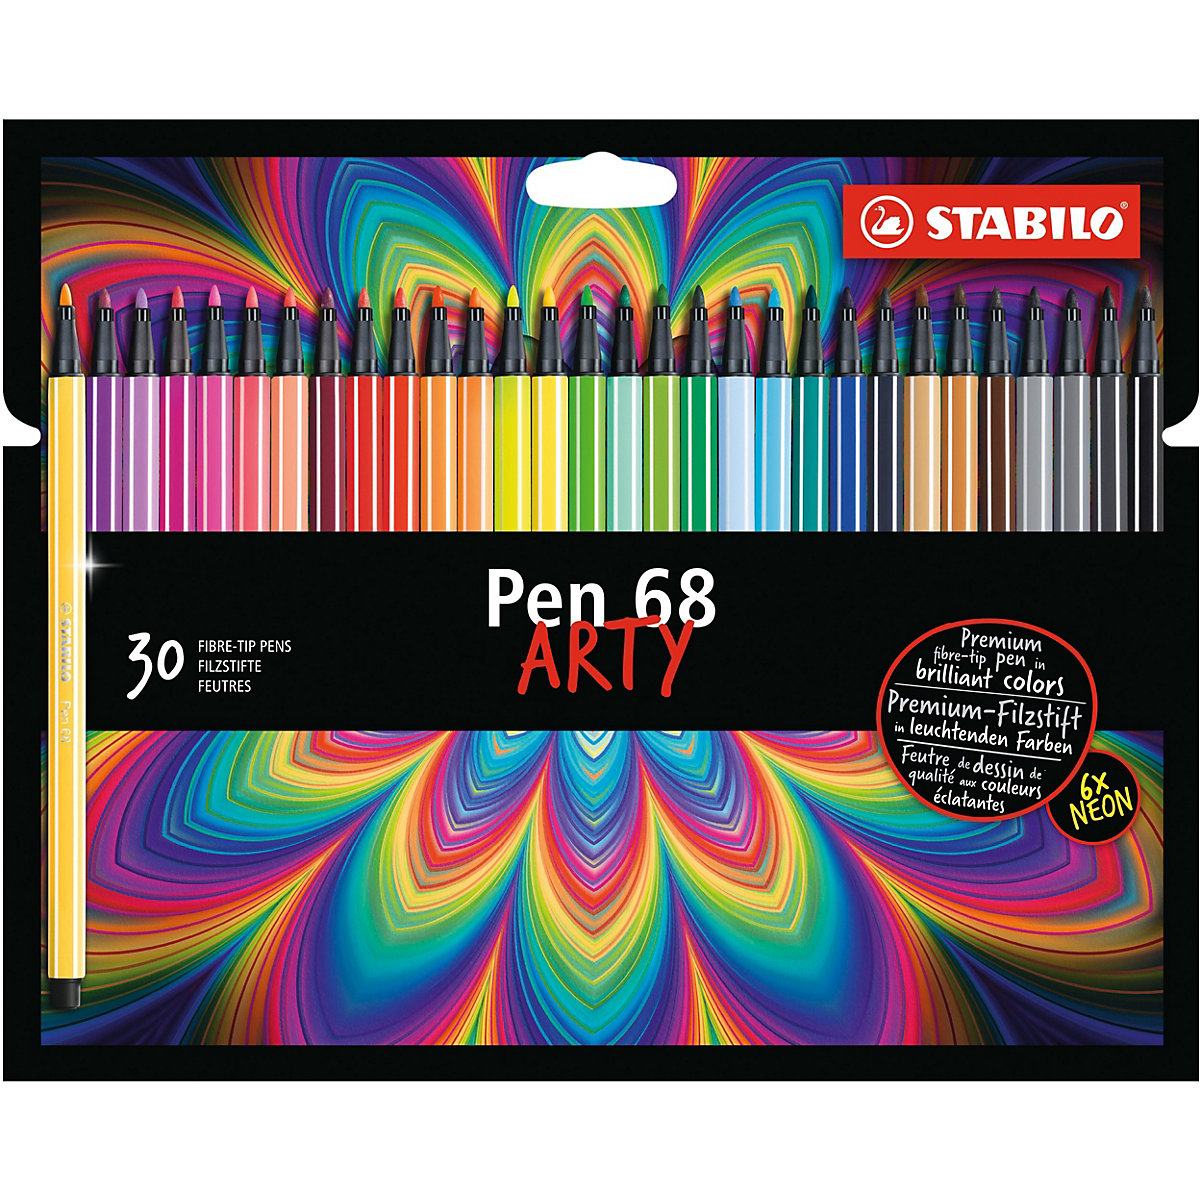 Premium-Filzstifte Pen 68 ARTY 30 Farben